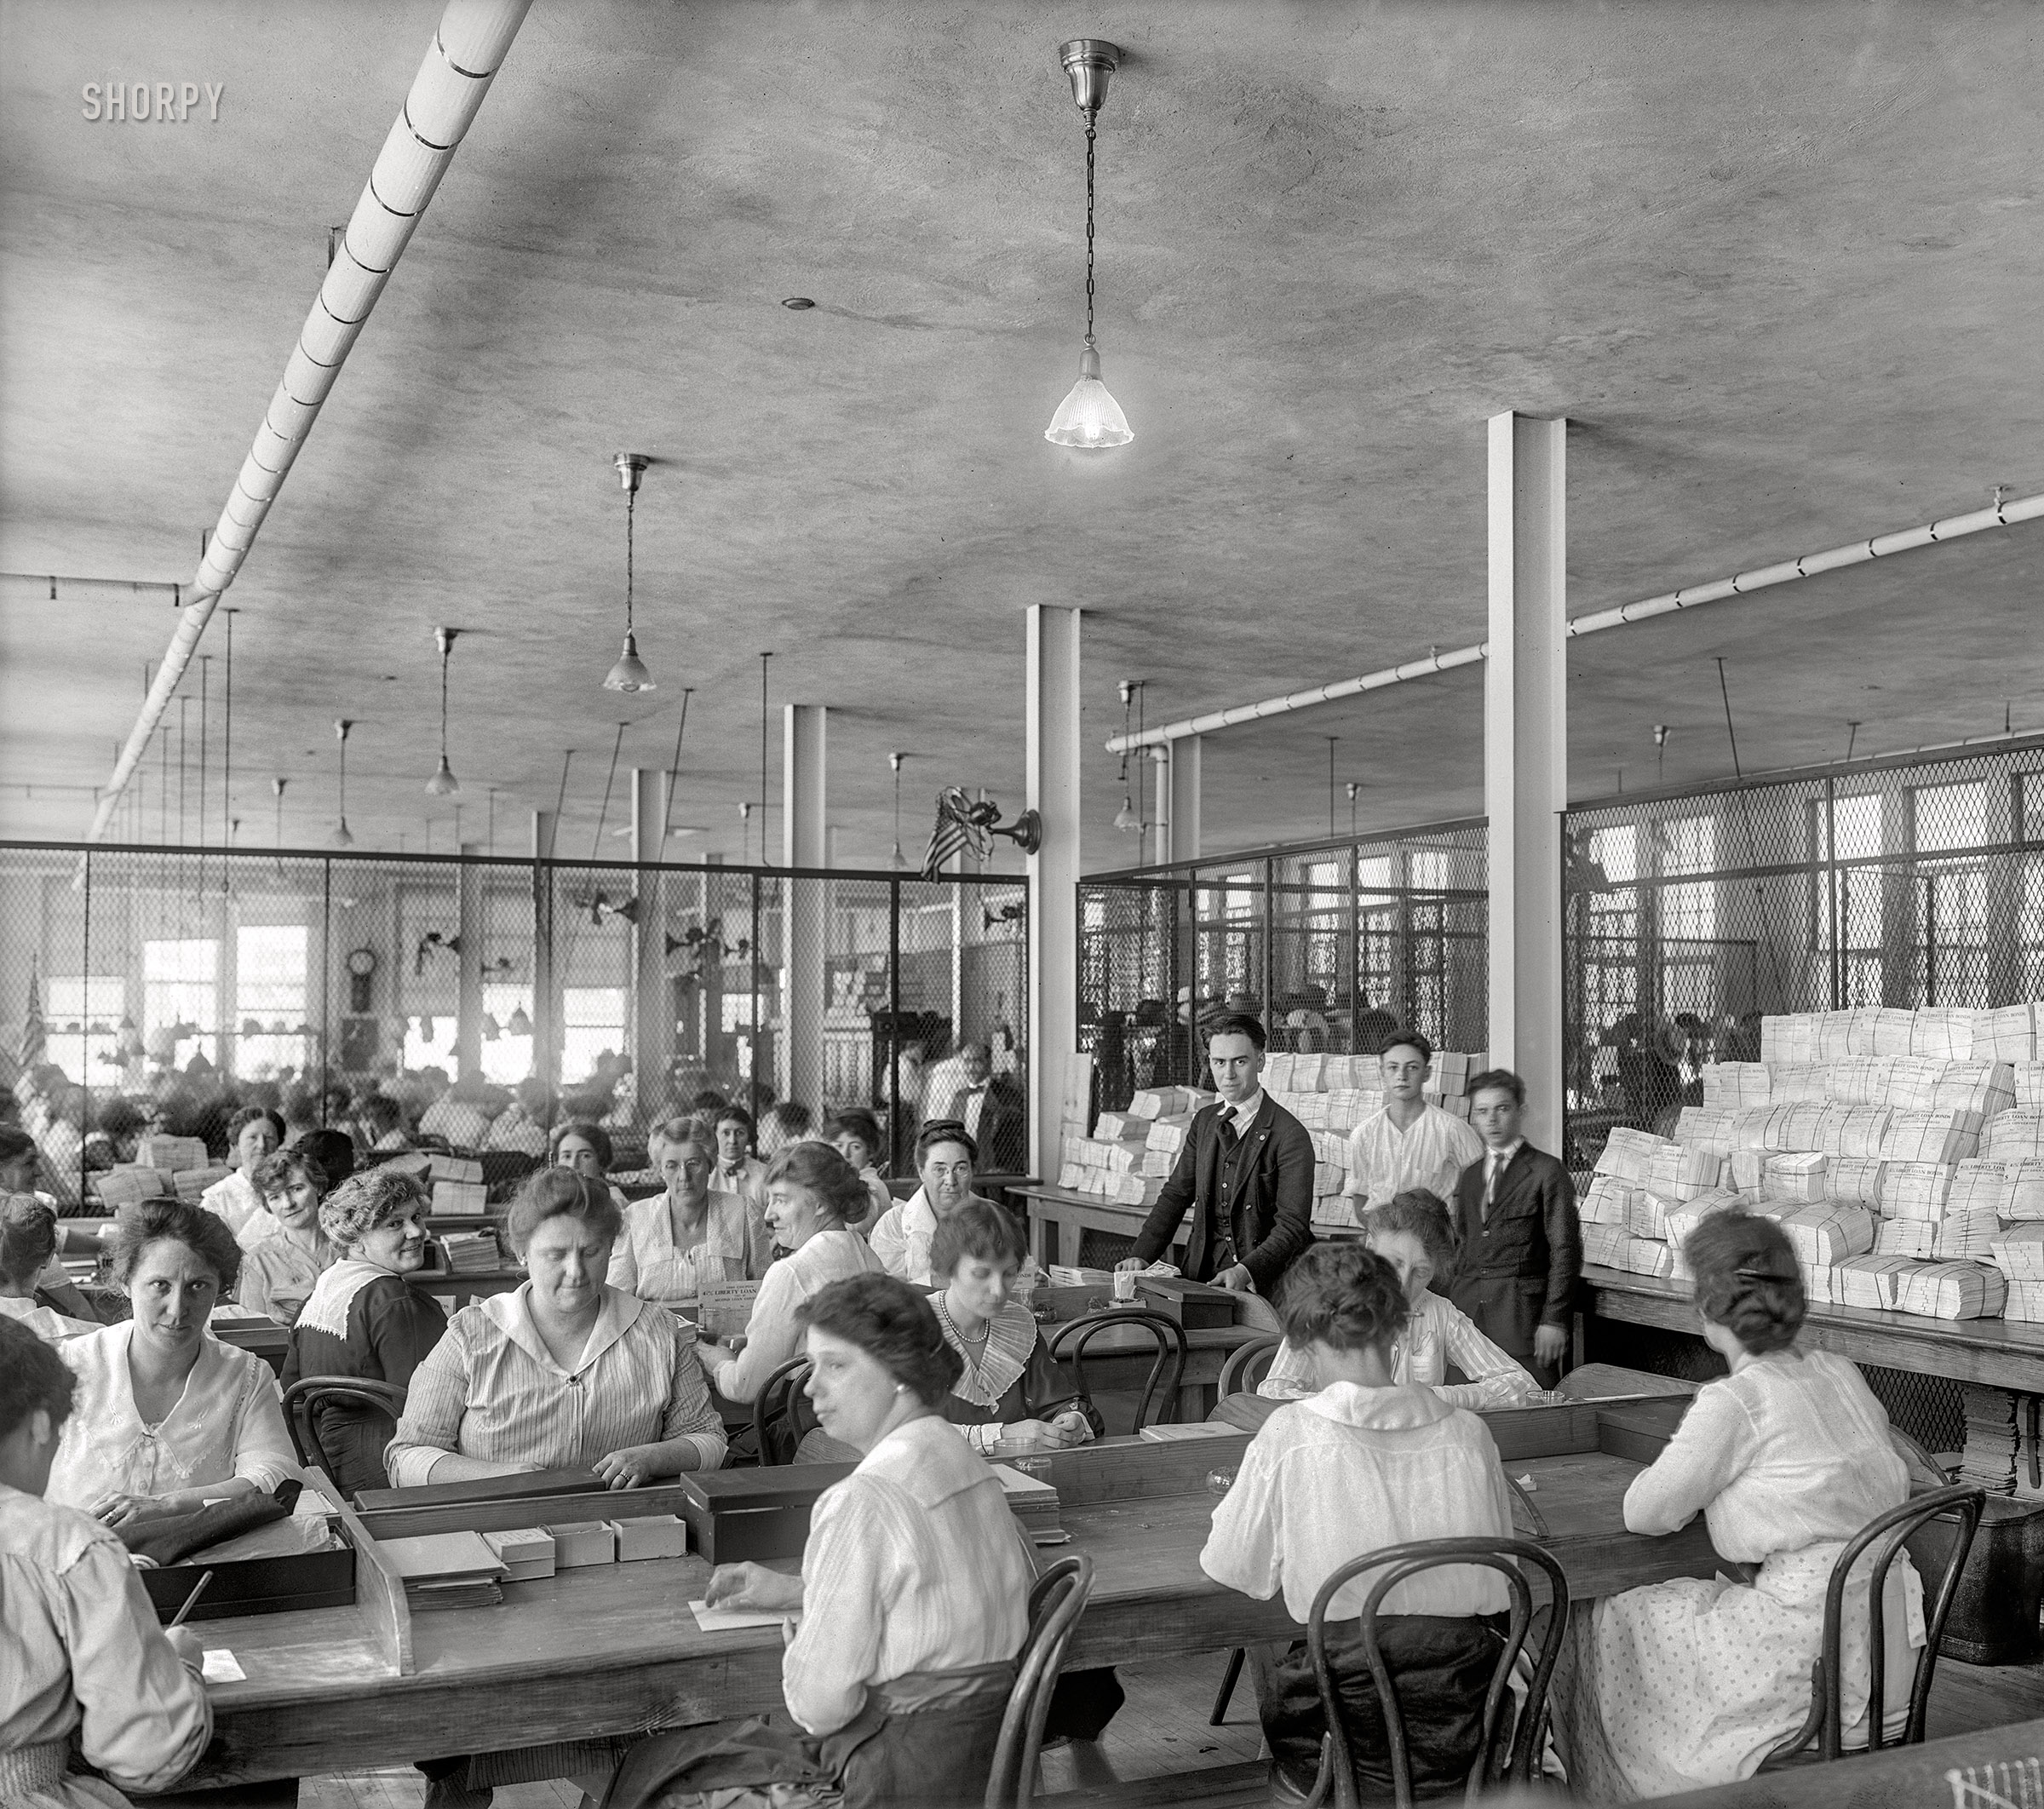 Washington, D.C., 1918. "Liberty Loan bonds -- Bureau of Engraving and Printing." Financing the war effort. 8x10 inch glass negative, Harris & Ewing Collection. View full size.